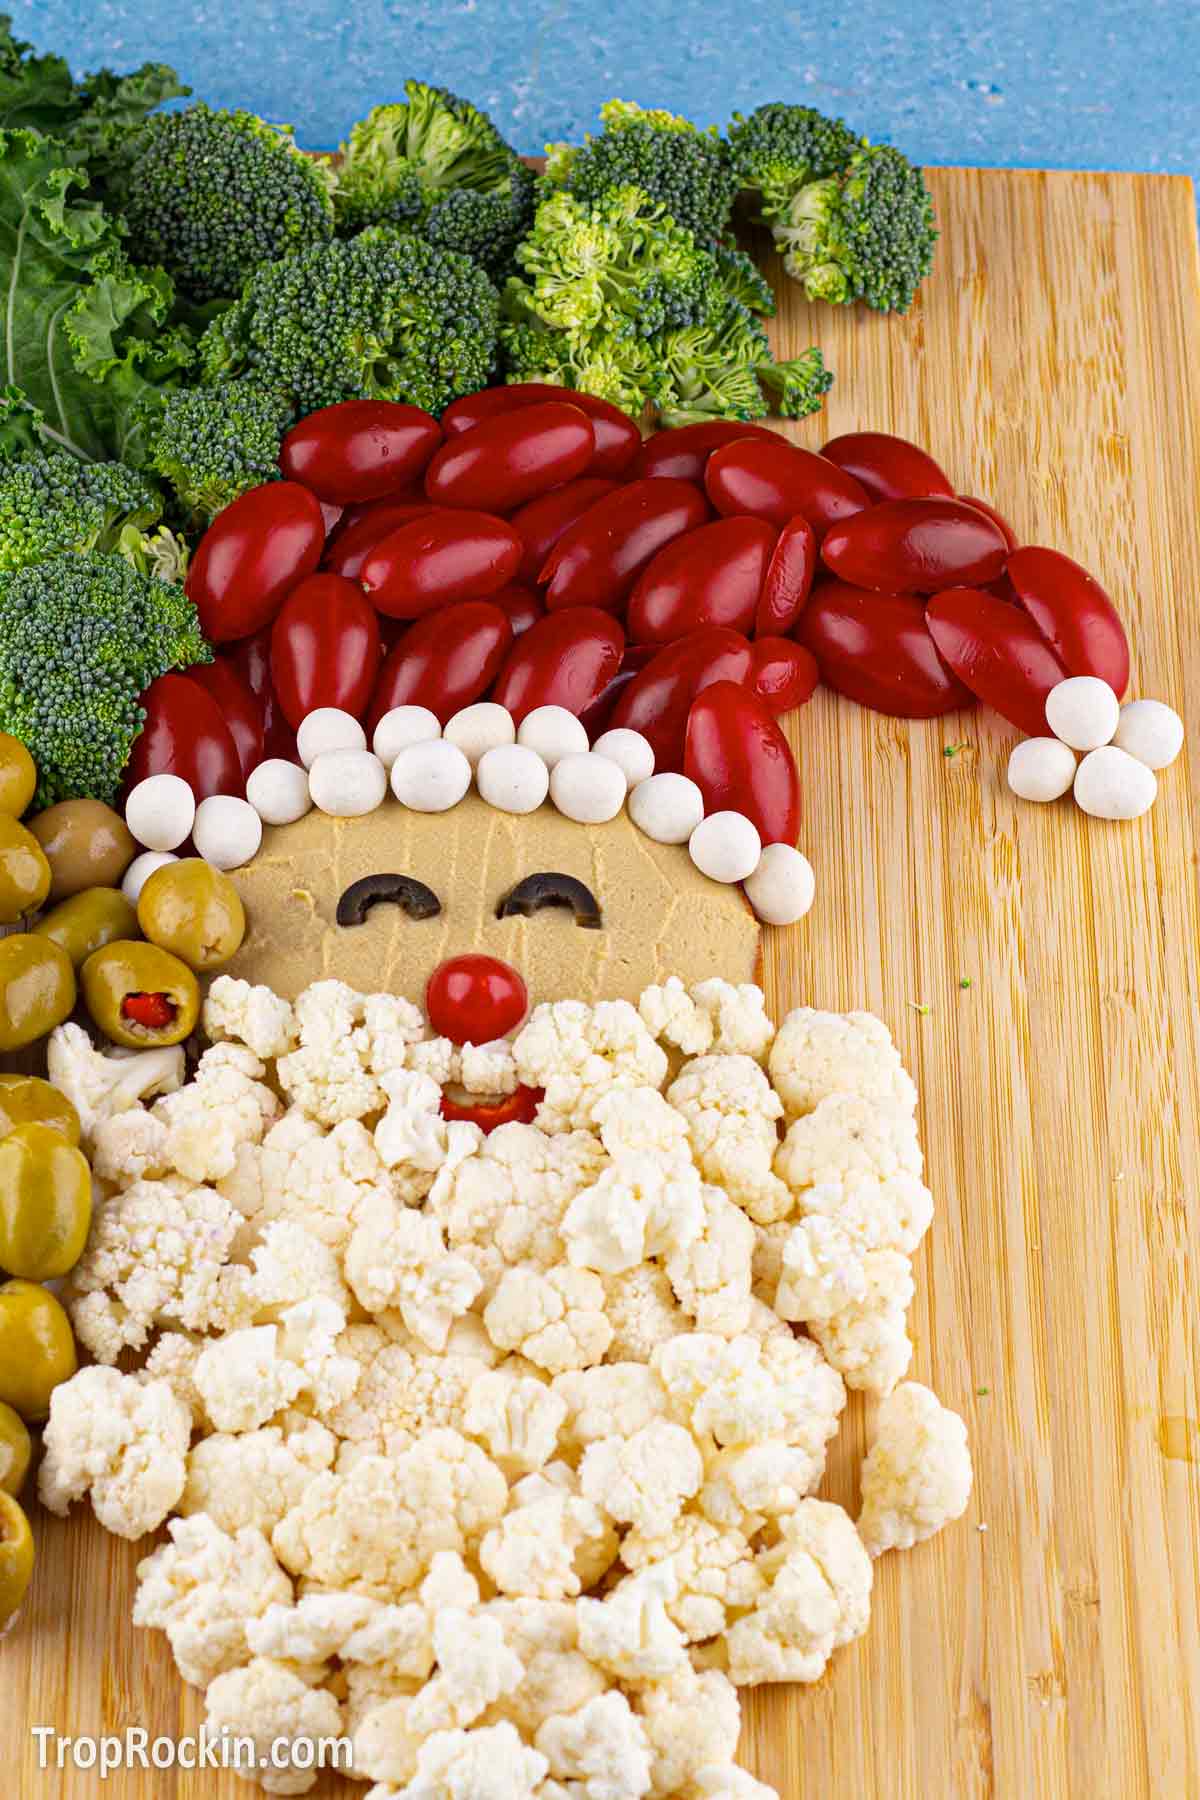 santa veggie tray with santa's hat made of cherry tomatoes.